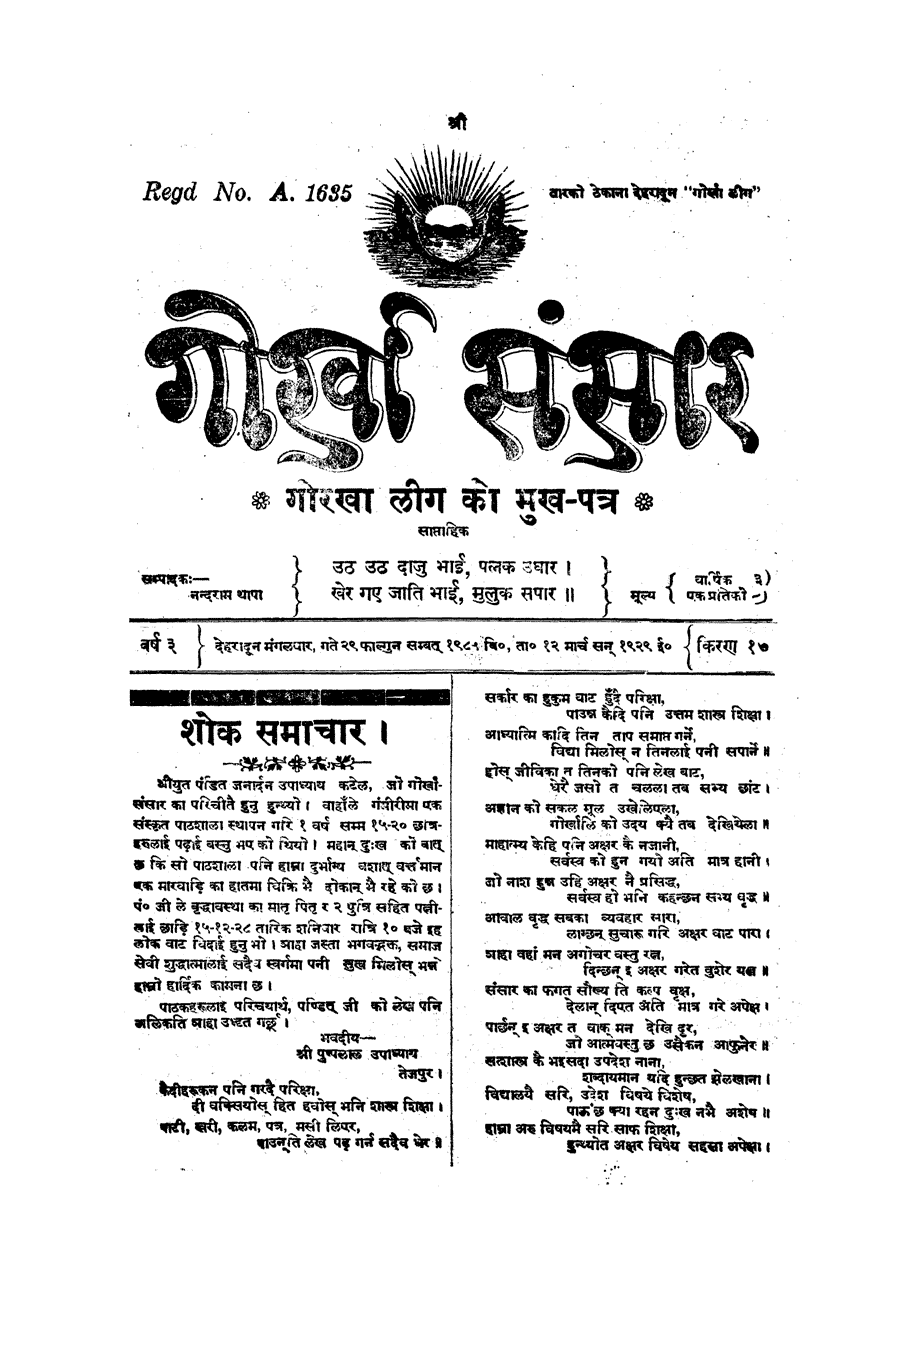 Gorkha Sansar, 12 Mar 1929, page 1